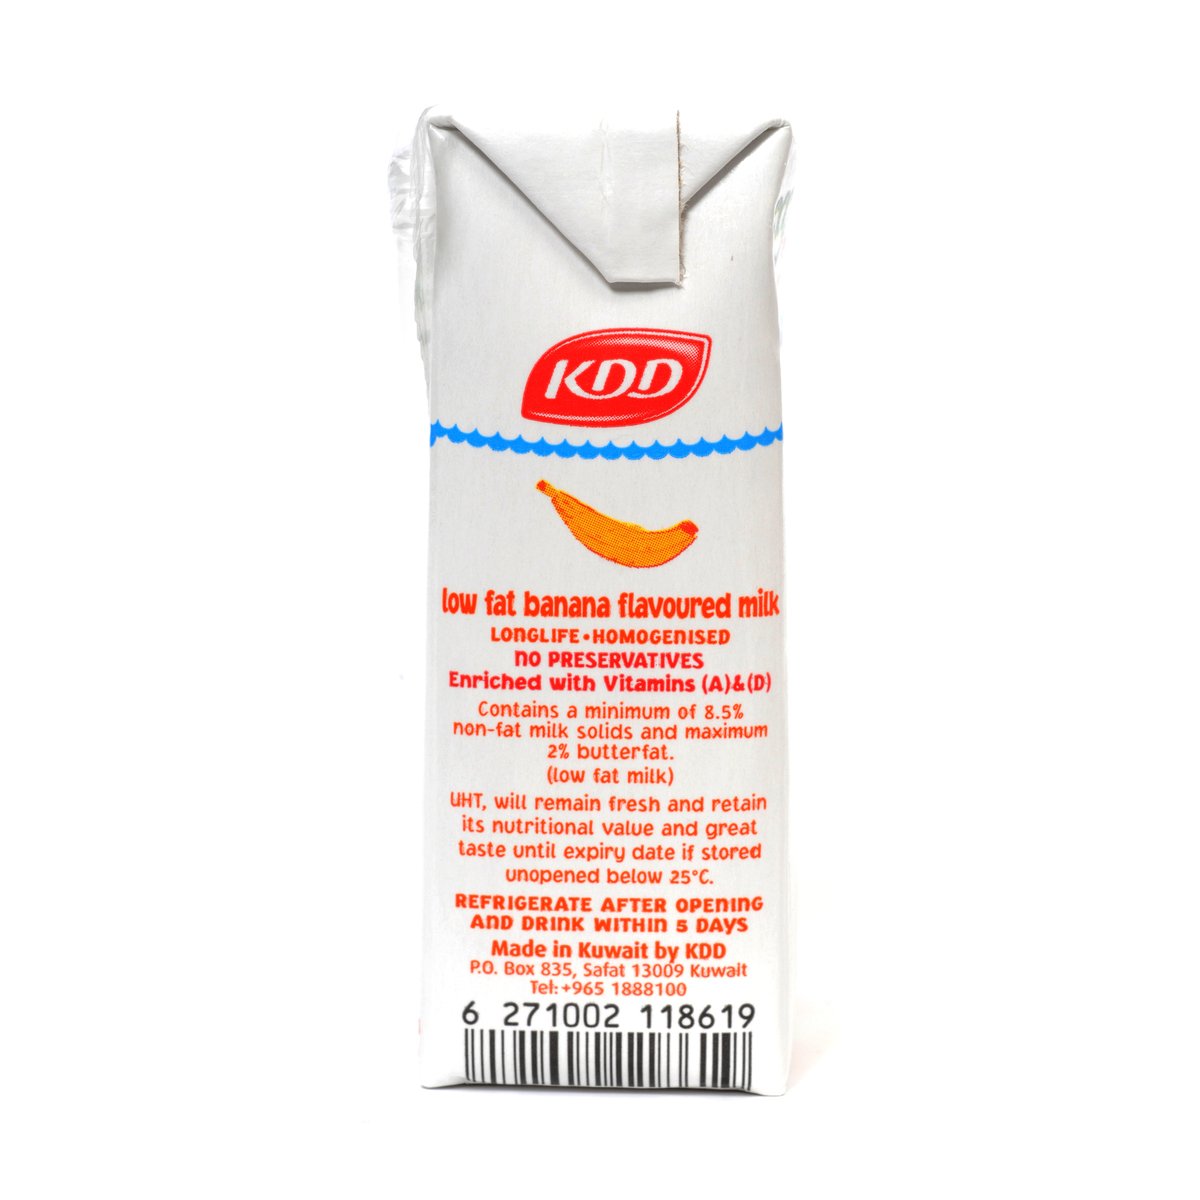 KDD 1-2-3 Banana Flavoured Long Life Low Fat Milk 6 x 125 ml